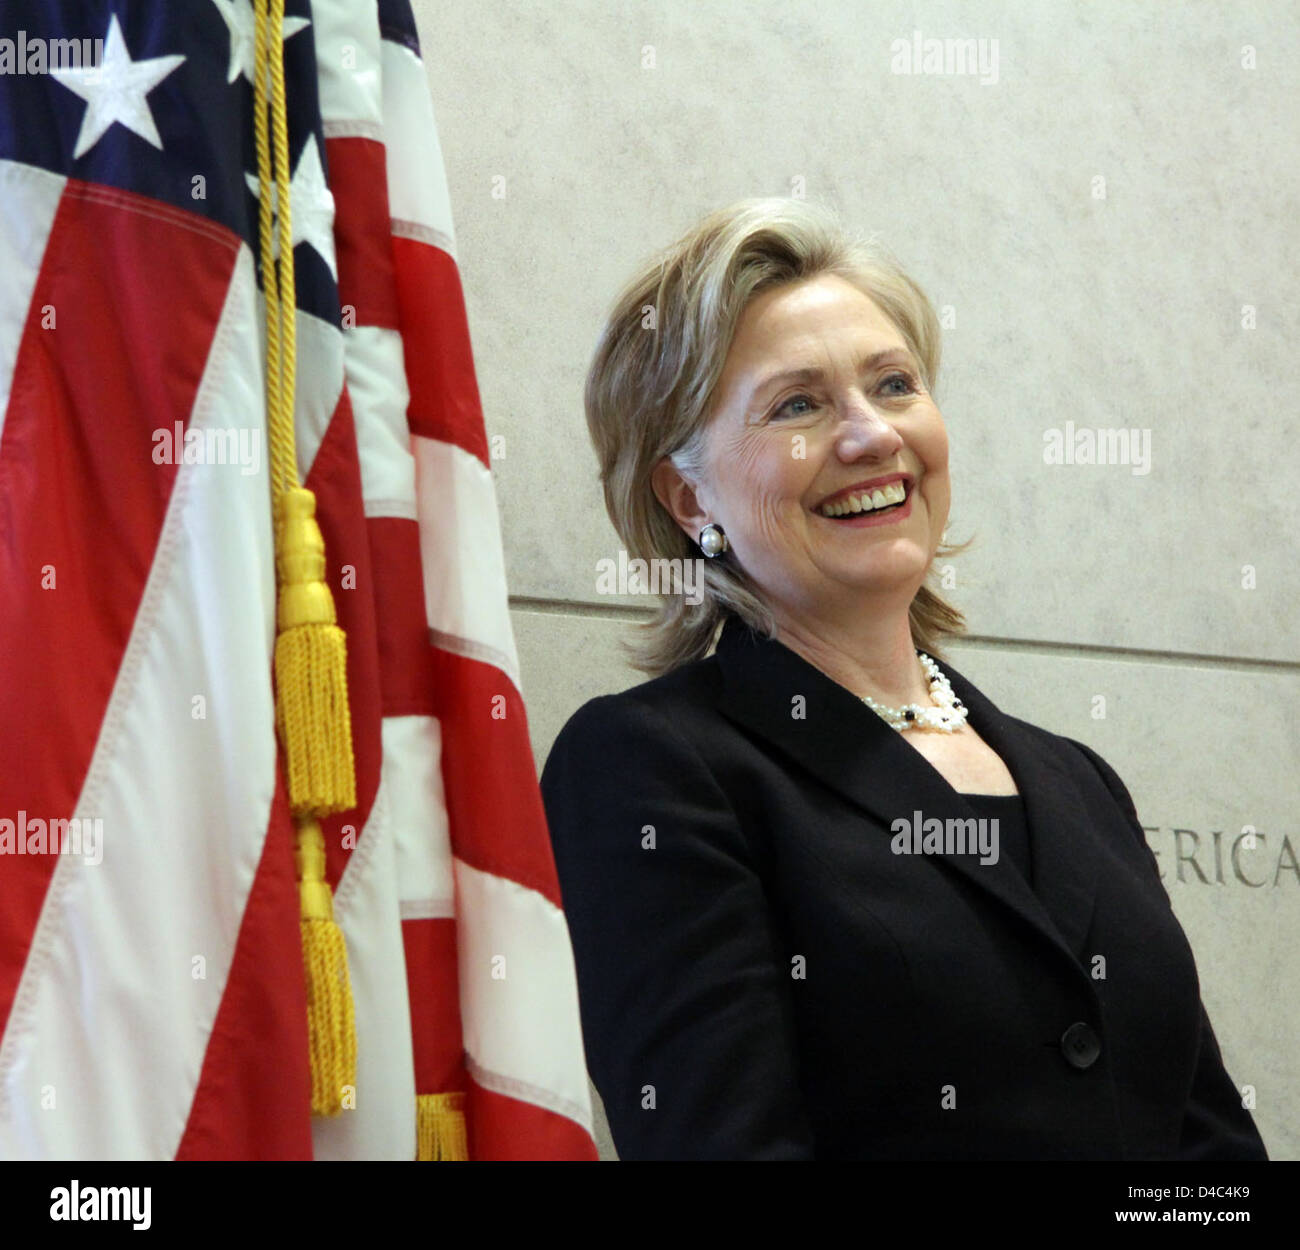 Secretary Clinton Speaks at U.S. Embassy in Ottawa Stock Photo